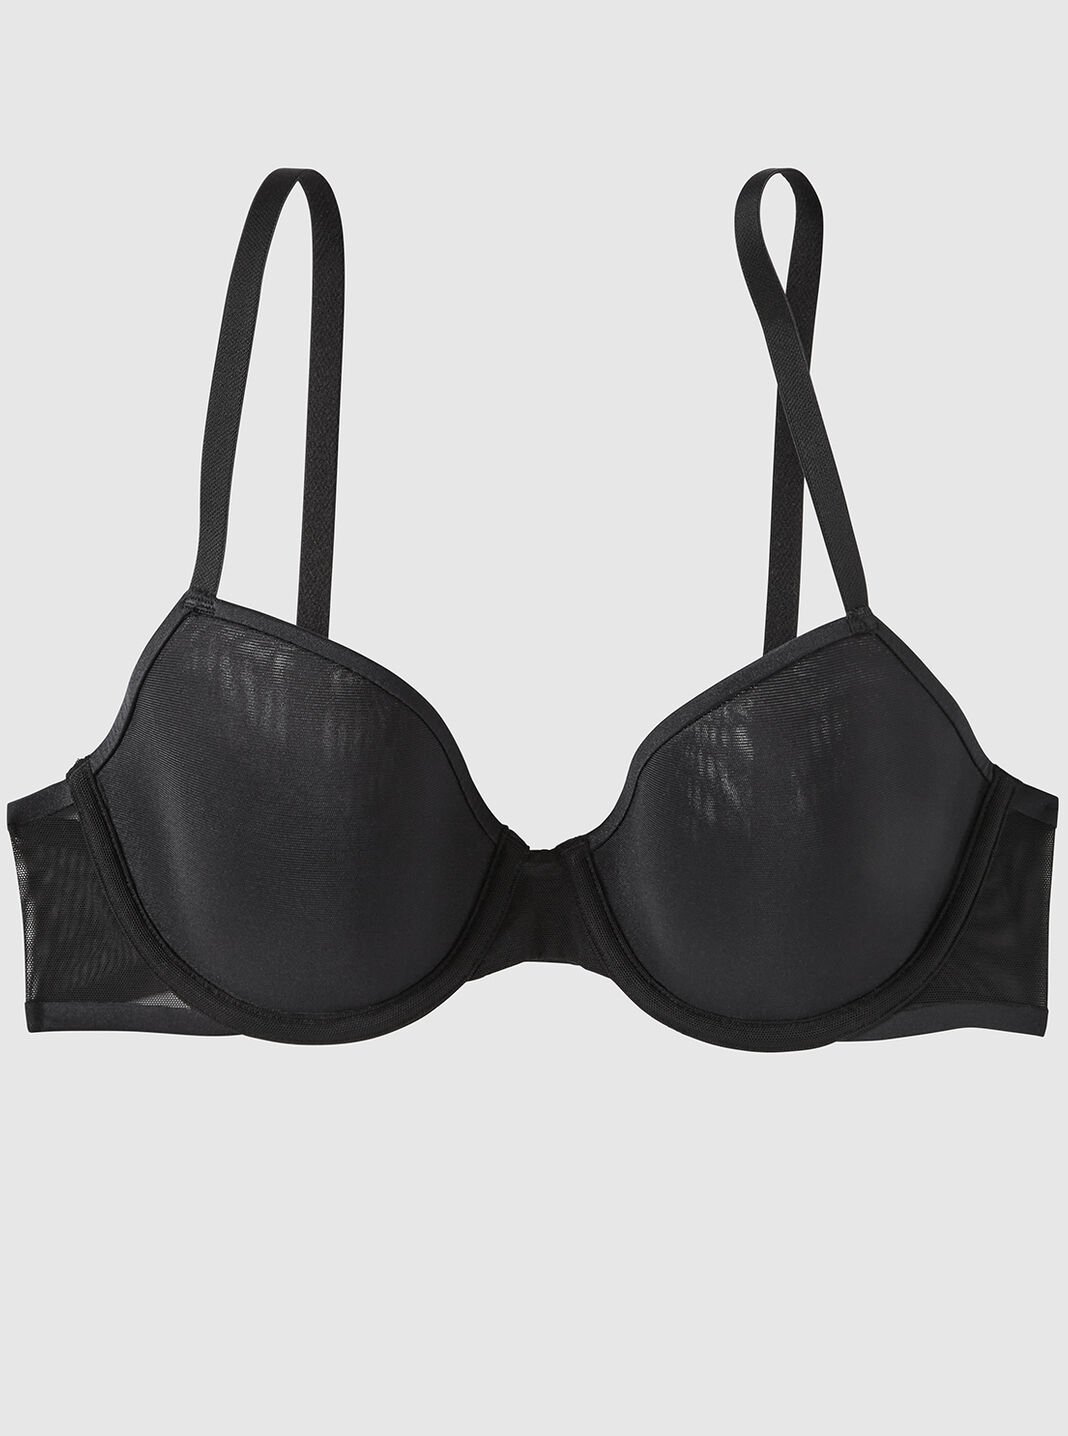 Buy LA SENSA Sexy Dreamy Hotness Cupless Bra (Large Size) (Large) Black at